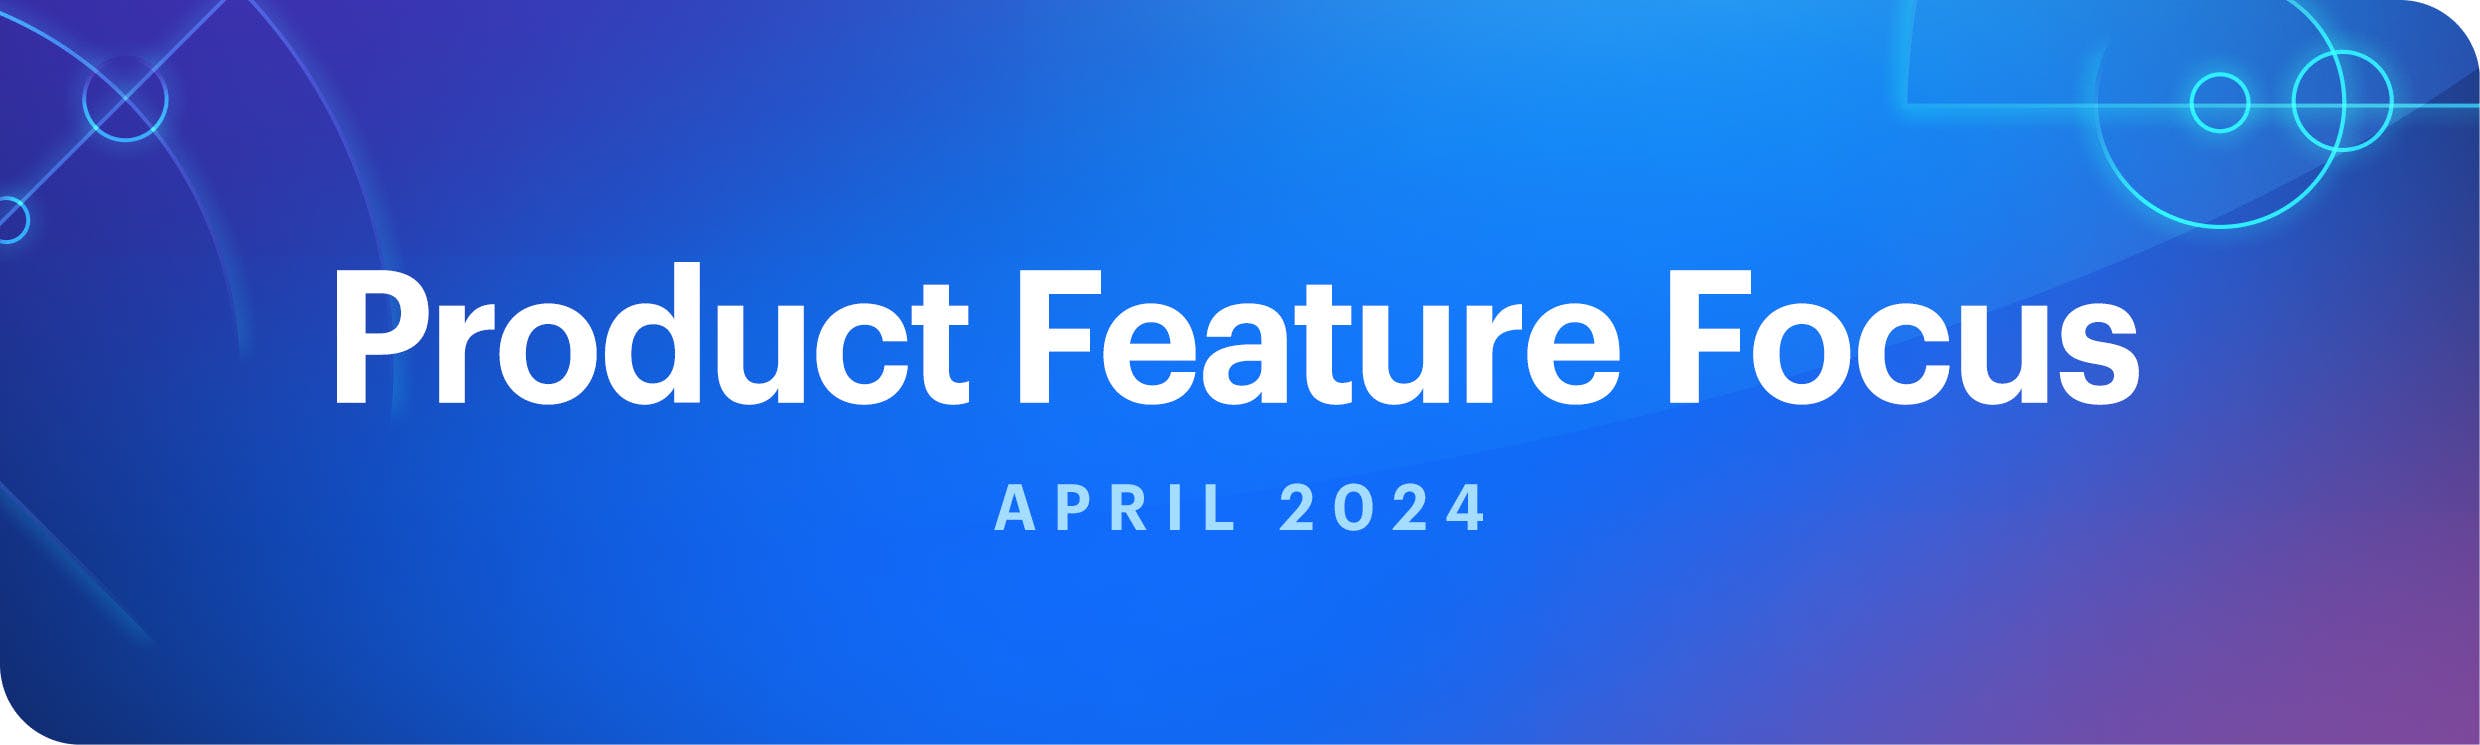 Product Feature Focus: April 2024